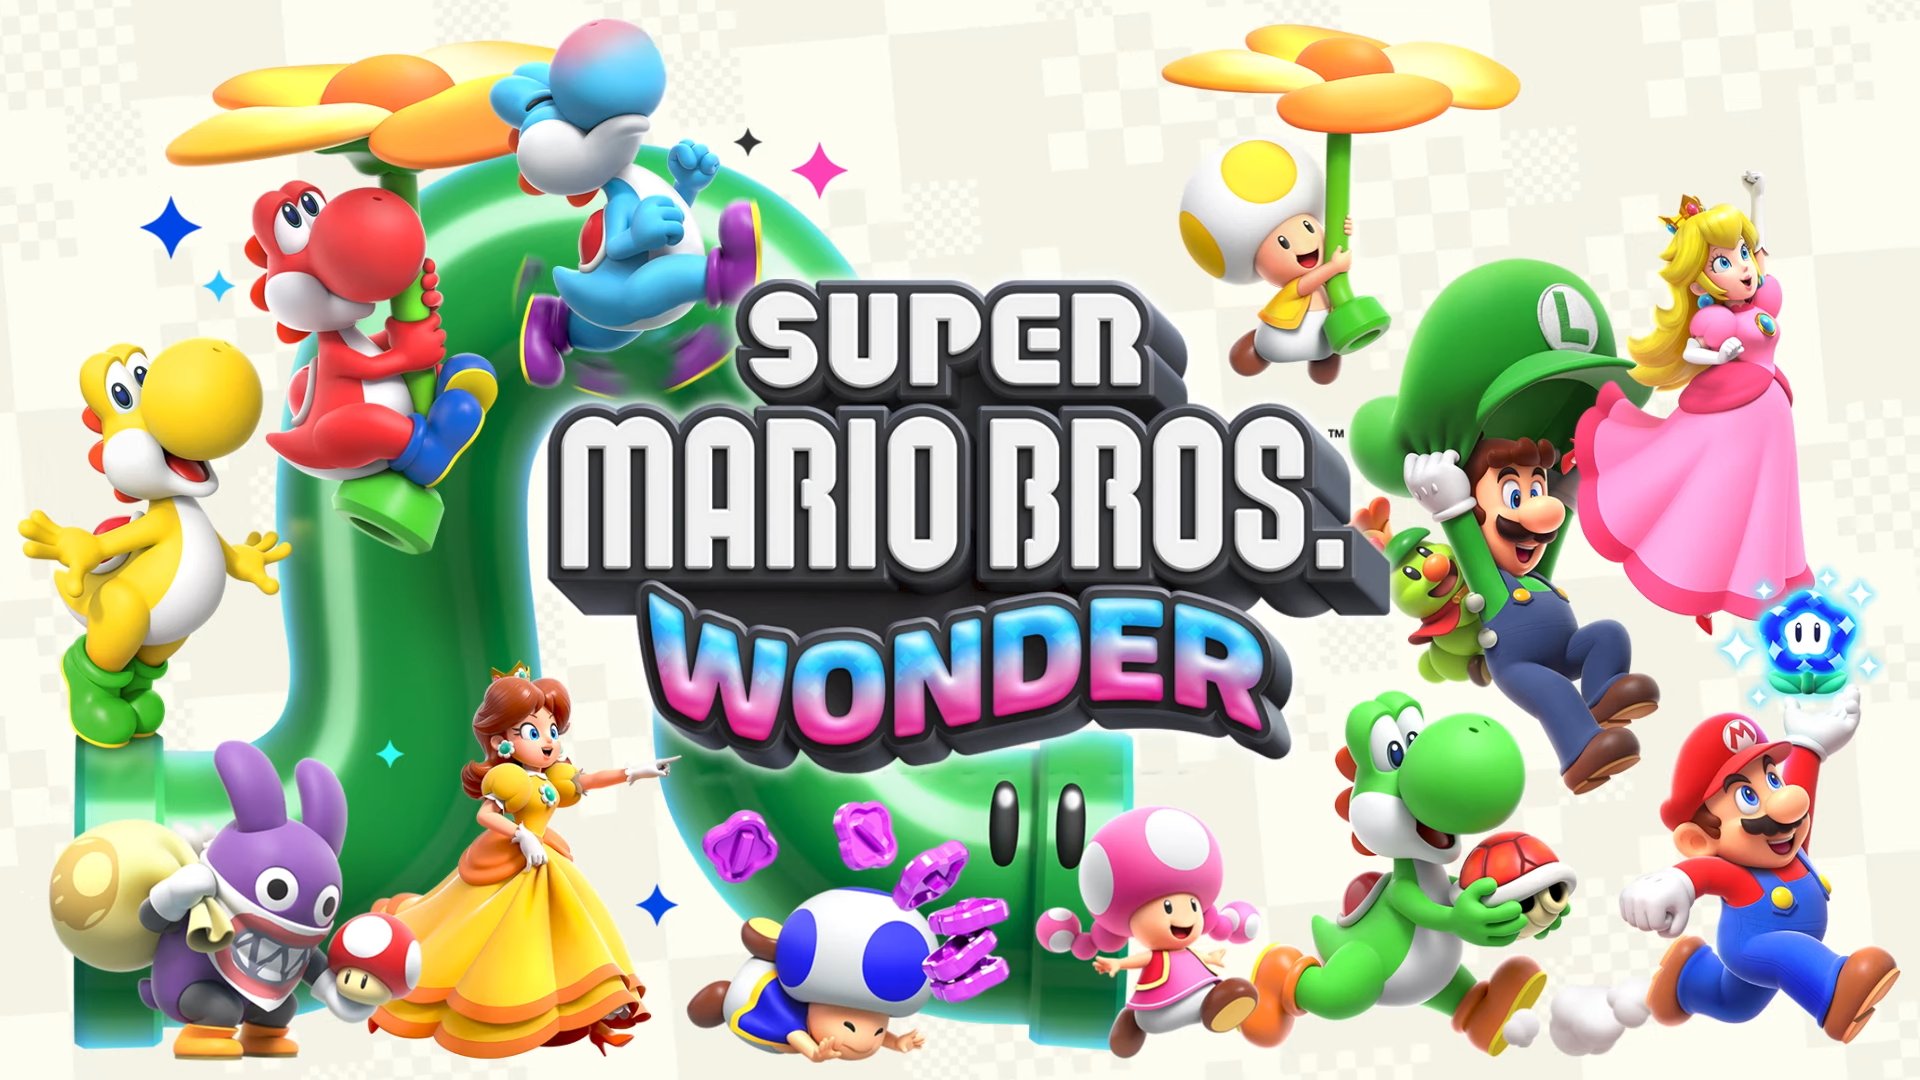 Super Mario Bros. Wonder: Official Gameplay Trailer